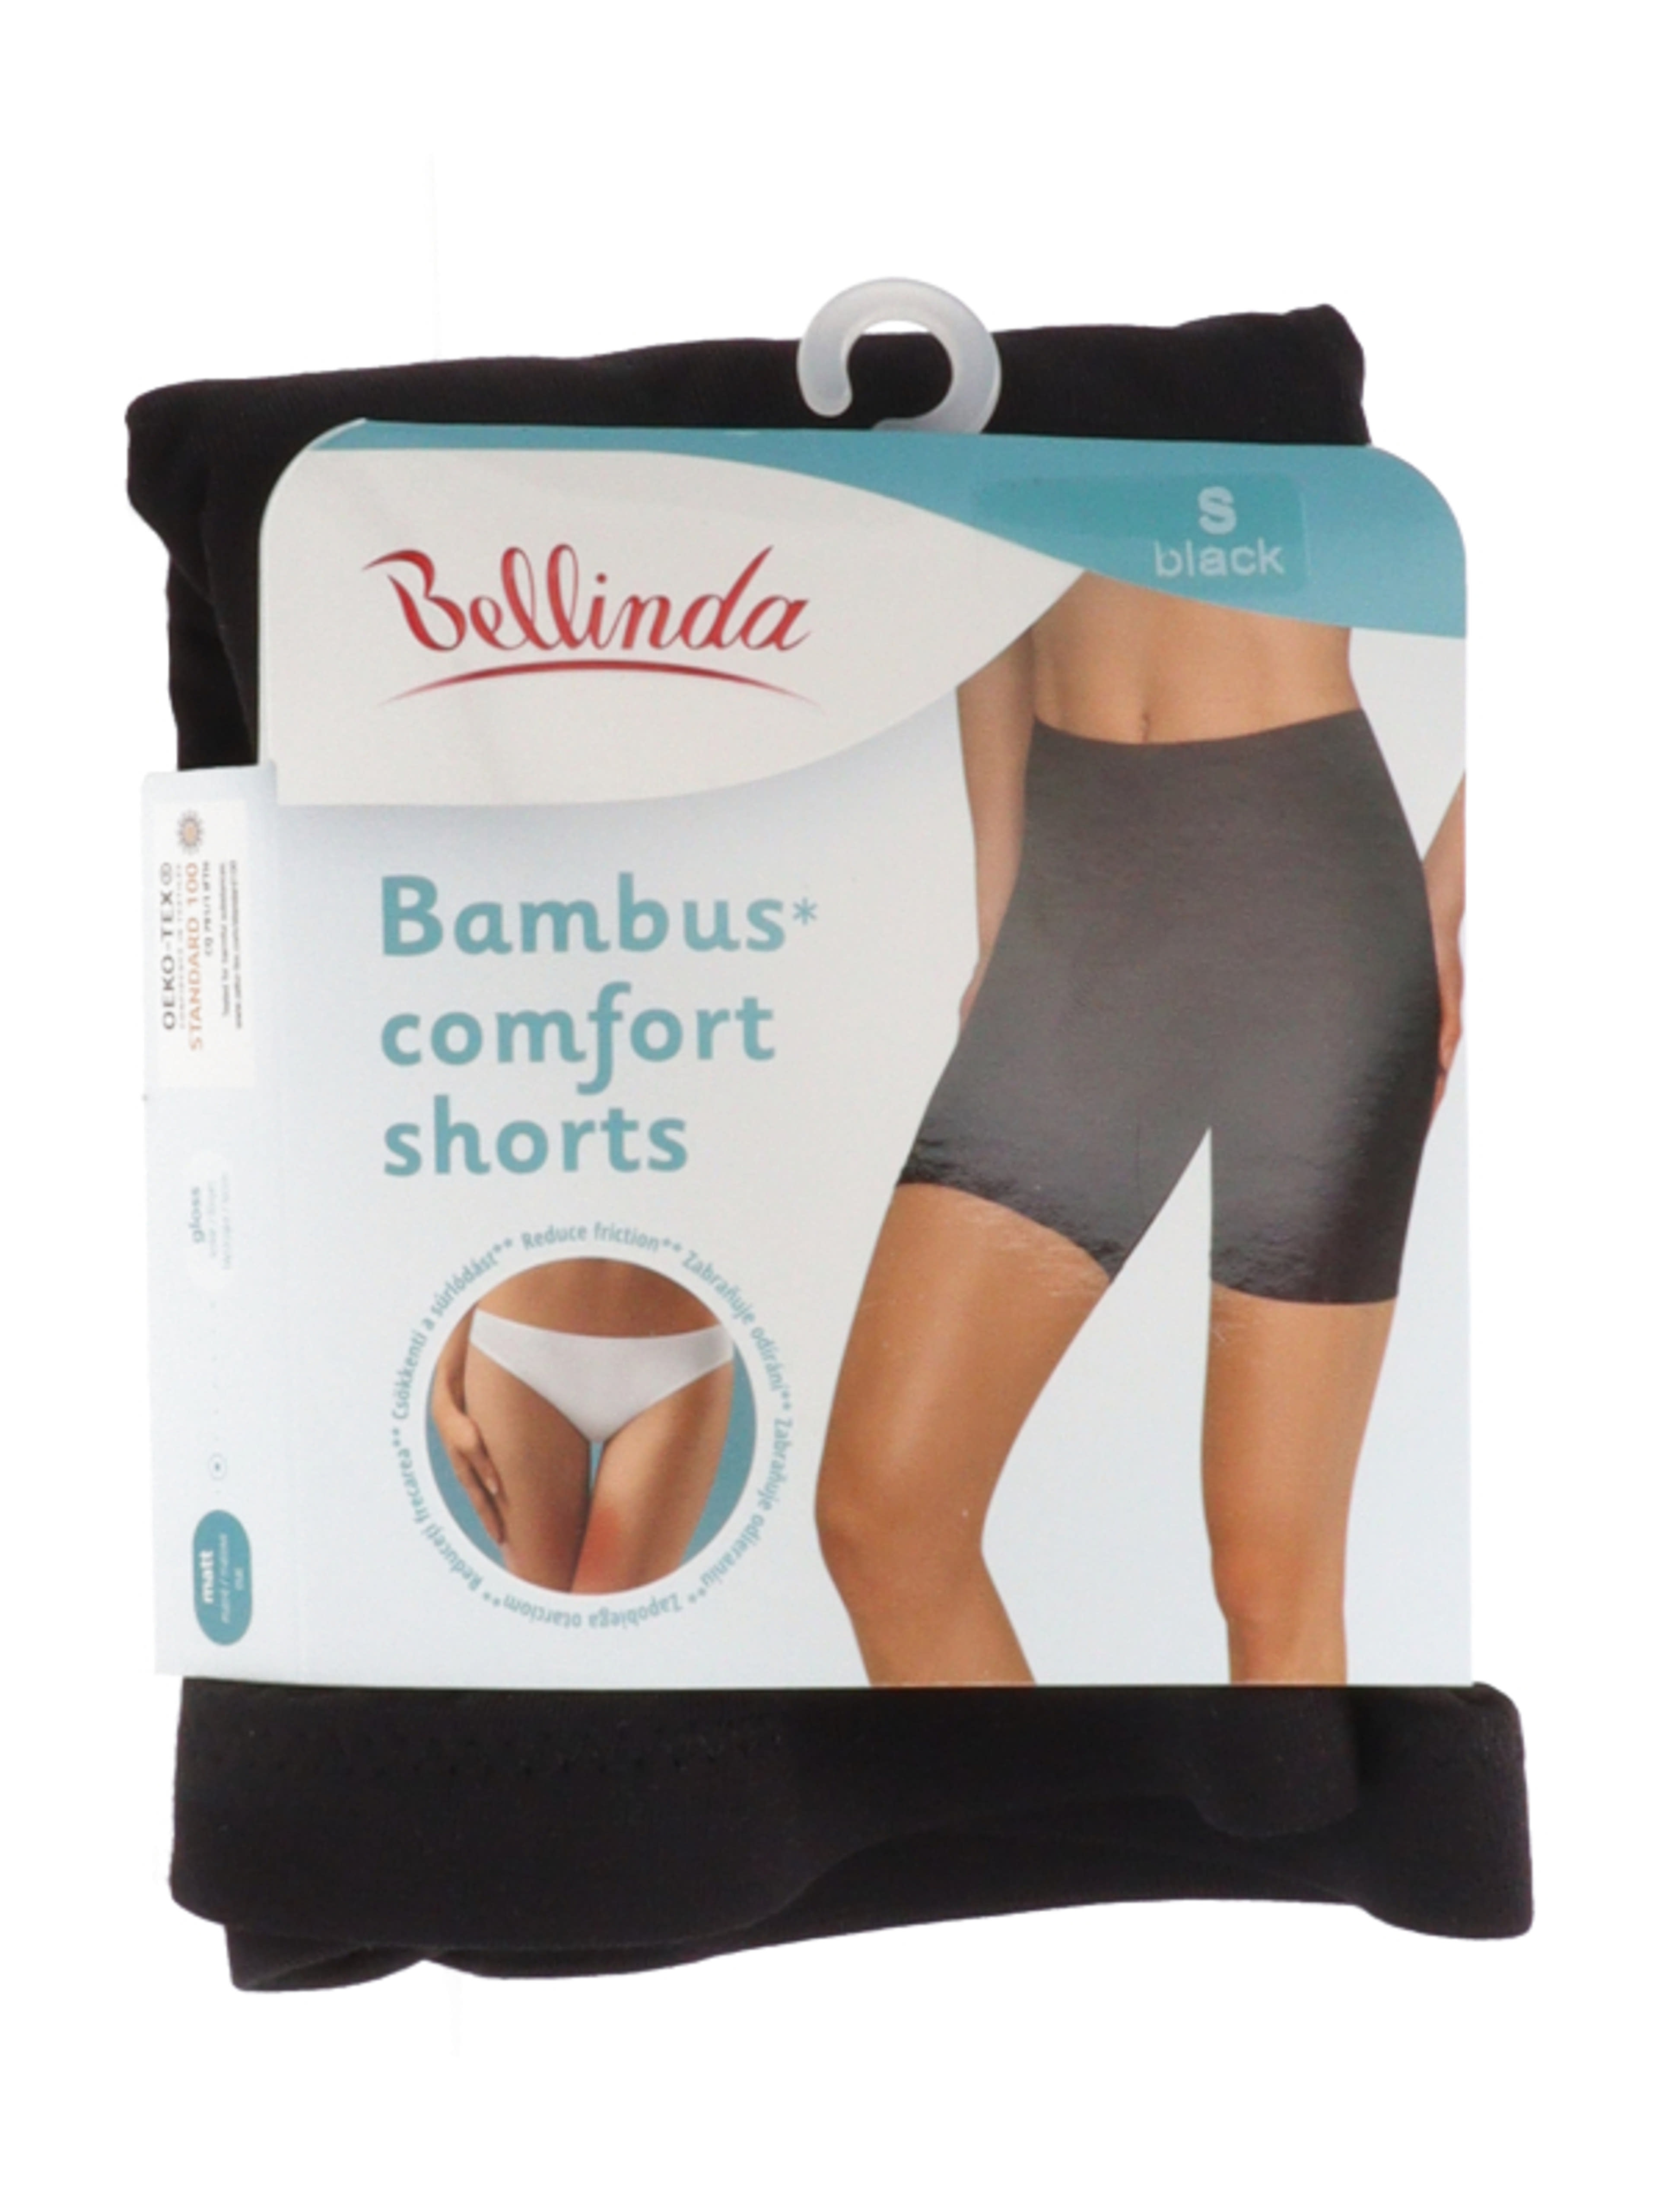 Bellinda Bambus Comfort short fekete S-es méret - 1 db